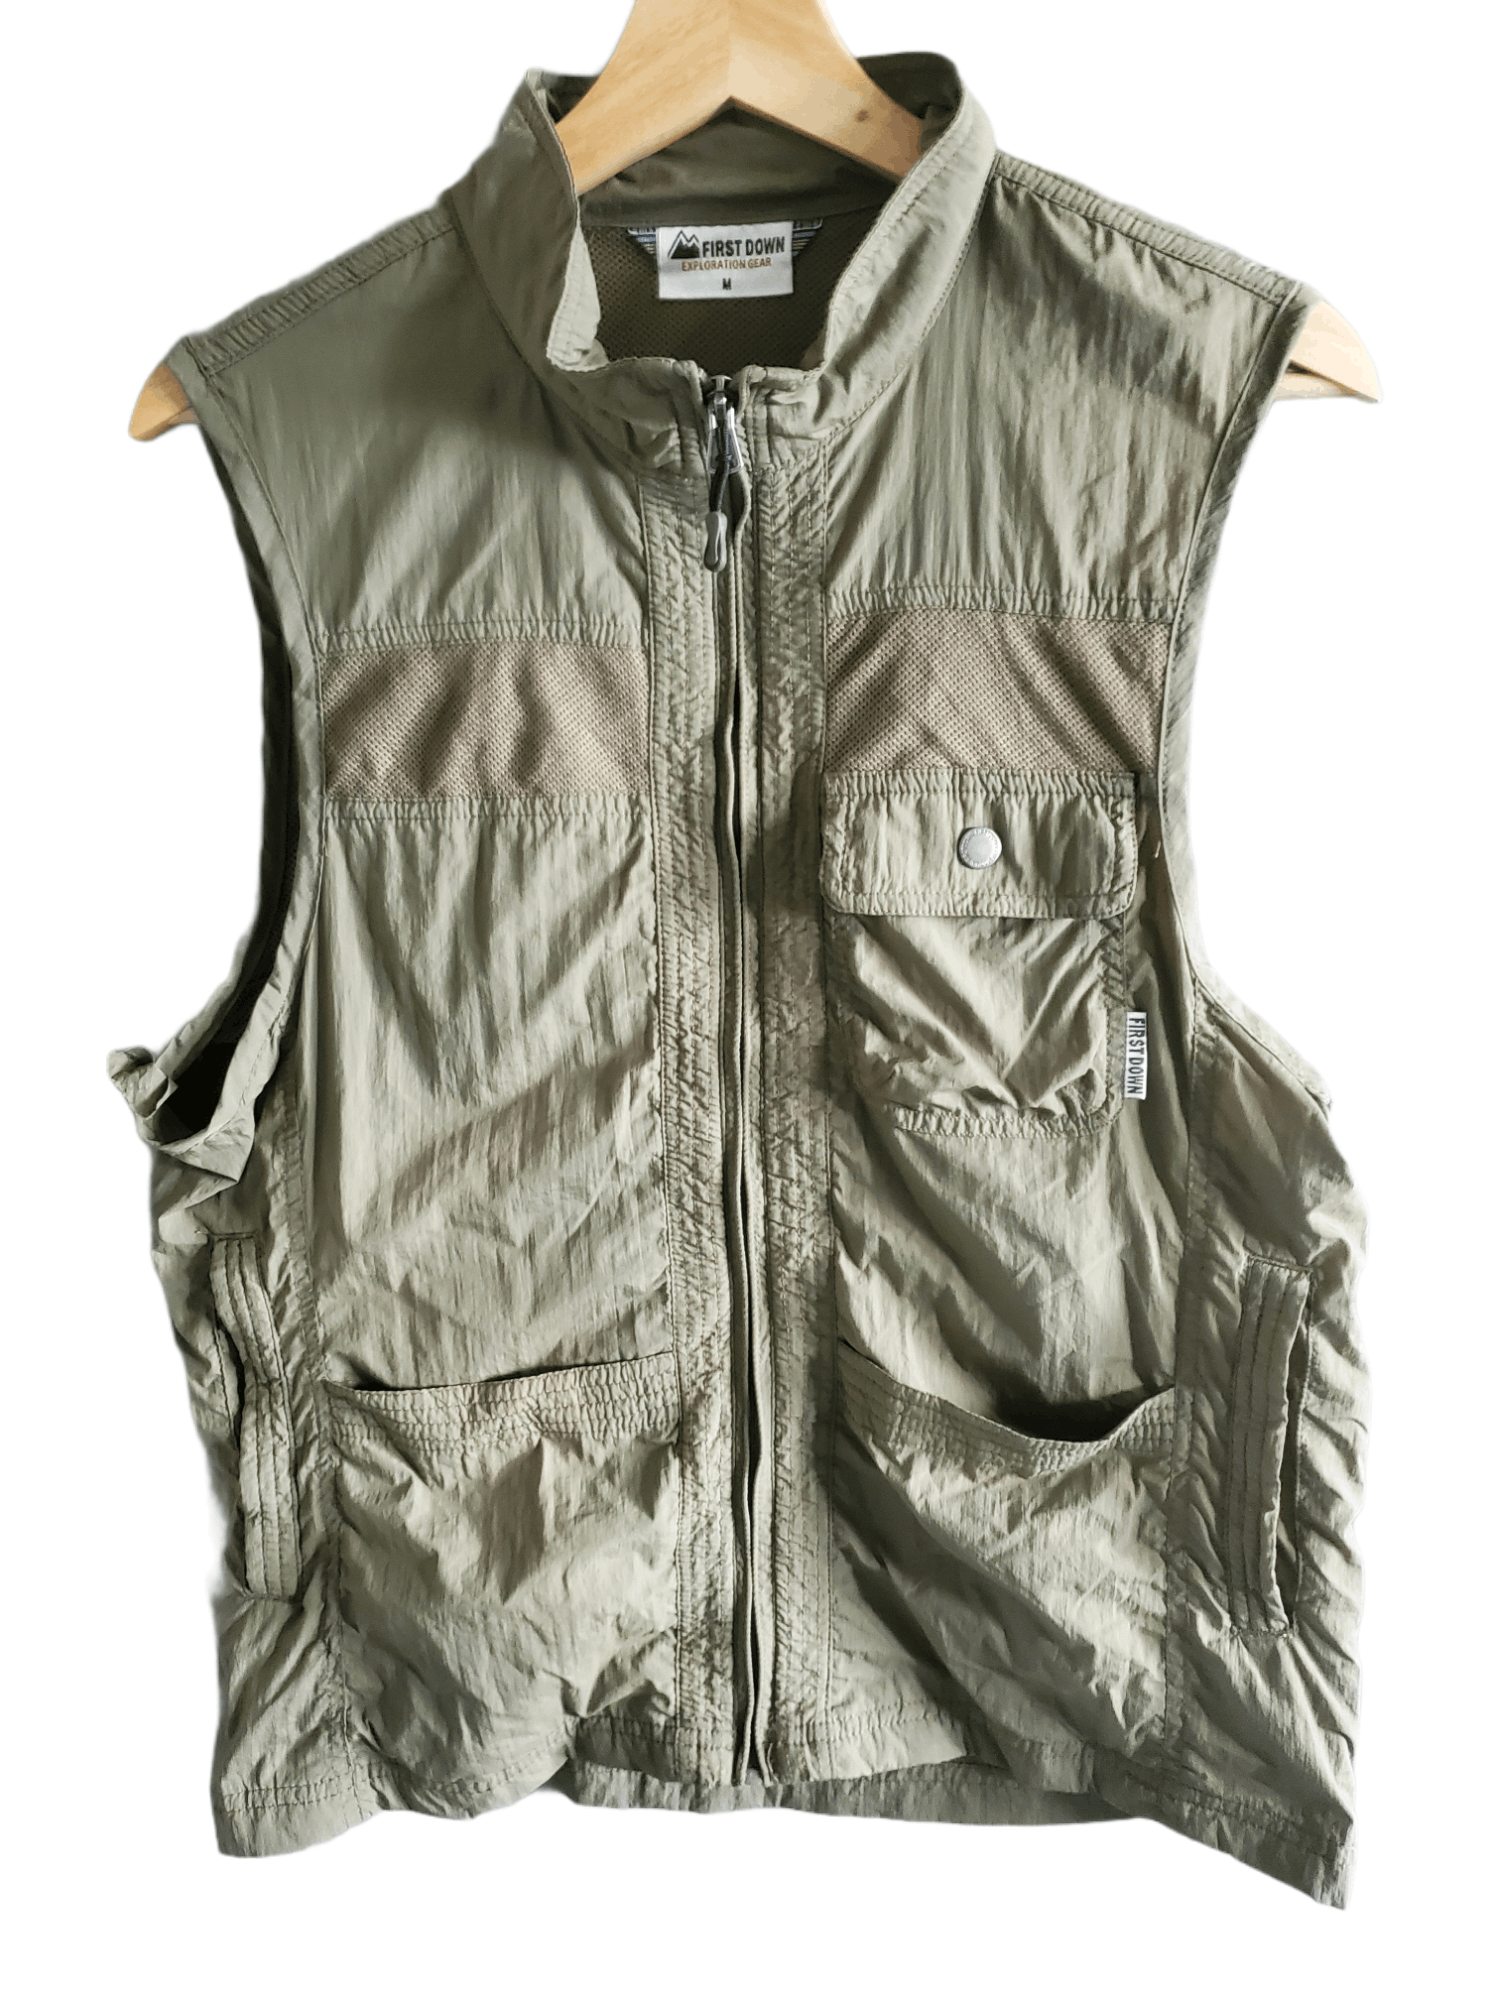 Designer Vest First Down Exploration Gear | Grailed